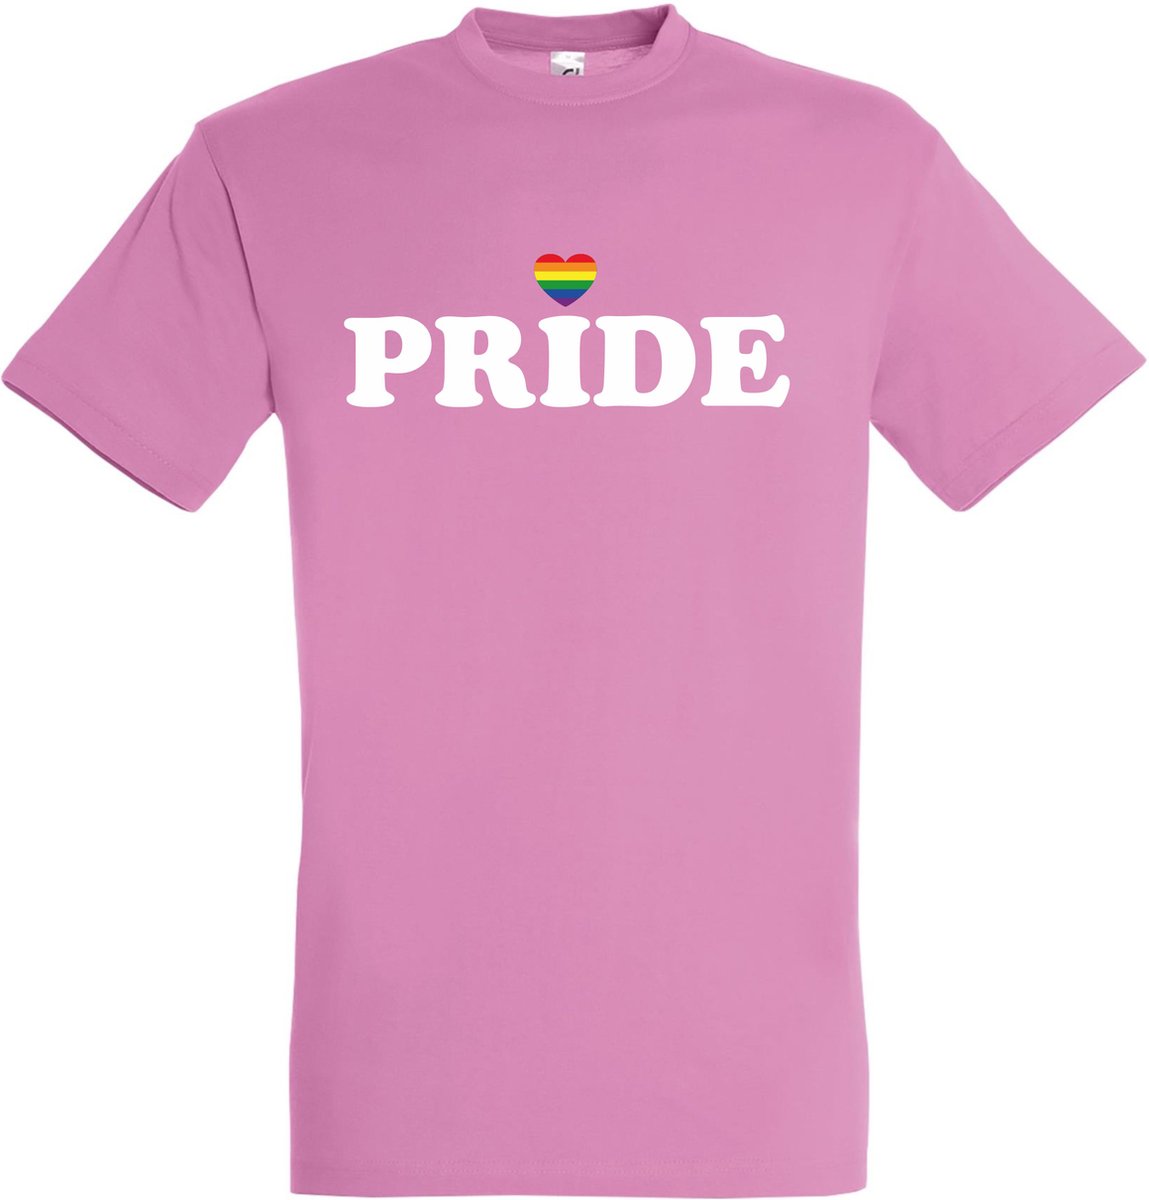 T-shirt Pride met hartje | Regenboog vlag | Gay pride kleding | Pride shirt | Roze | maat M